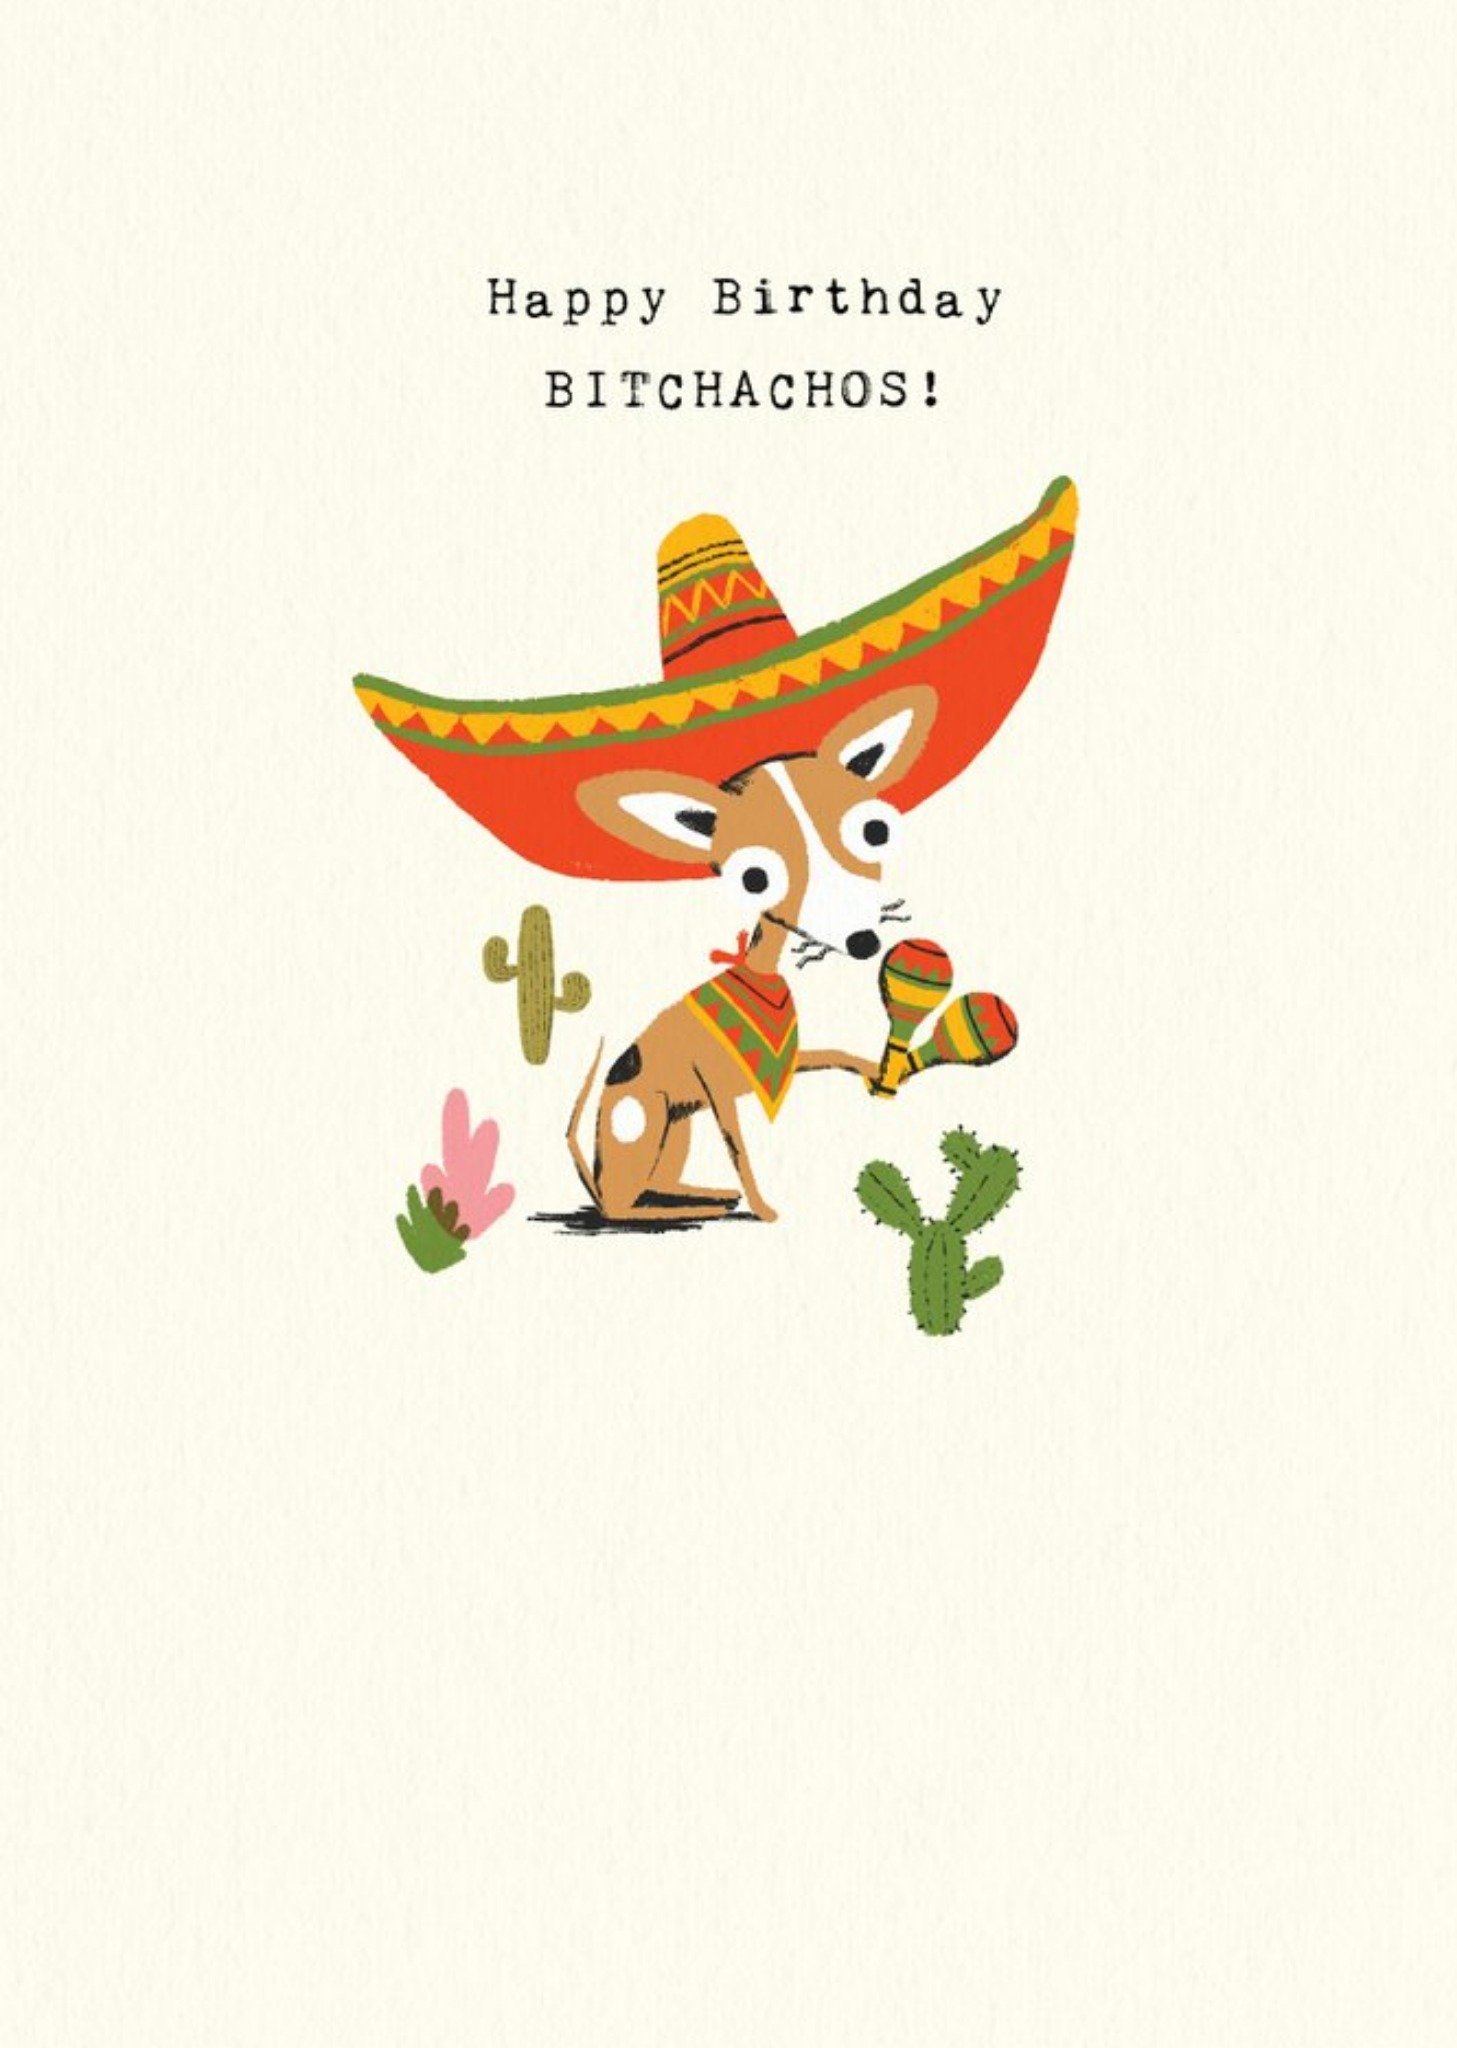 Moonpig Dog In Sombrero Hat Bitchachos Birthday Card Ecard